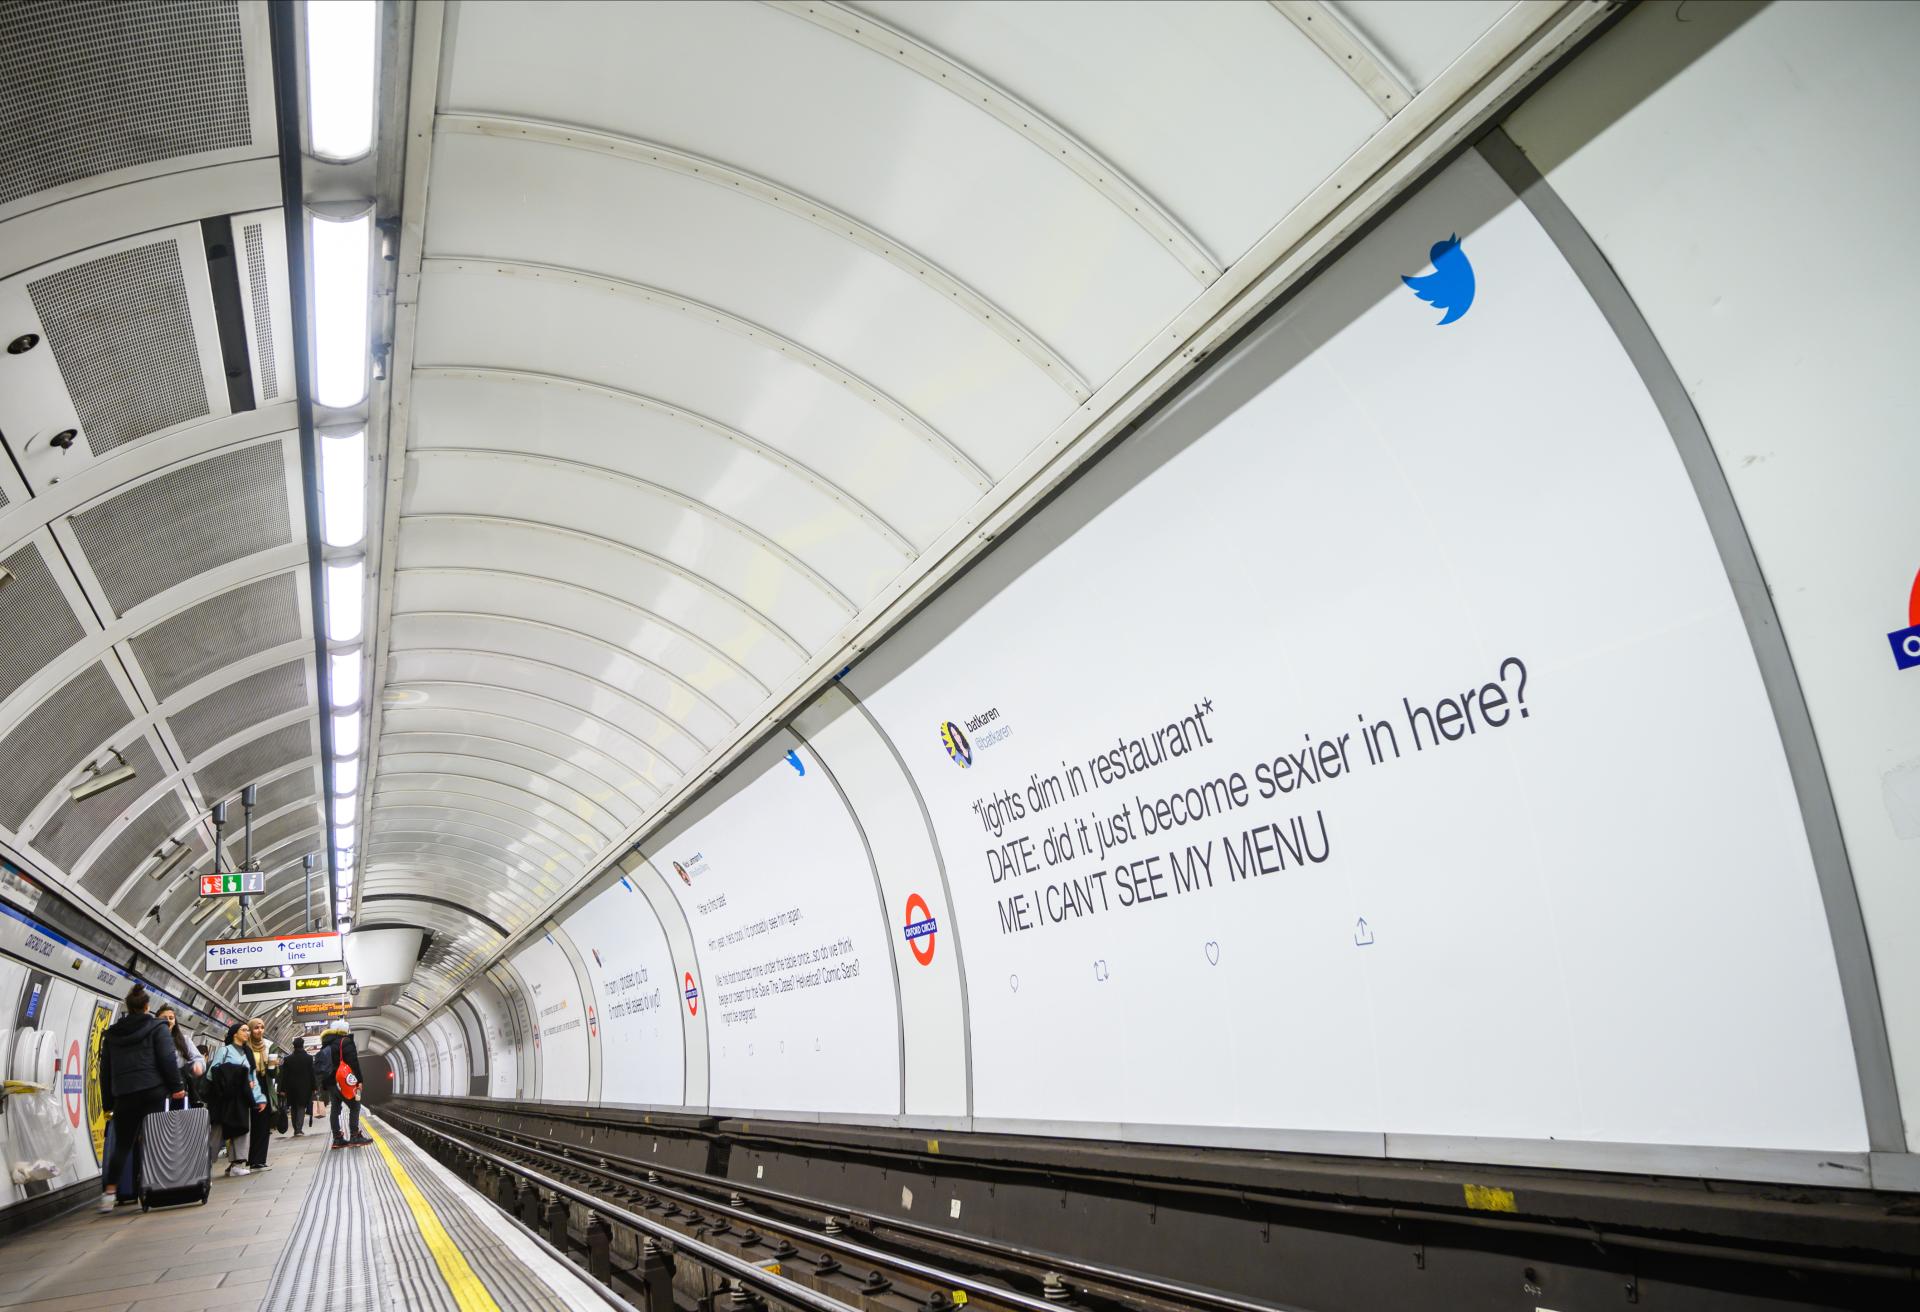 Tweet on the London Underground